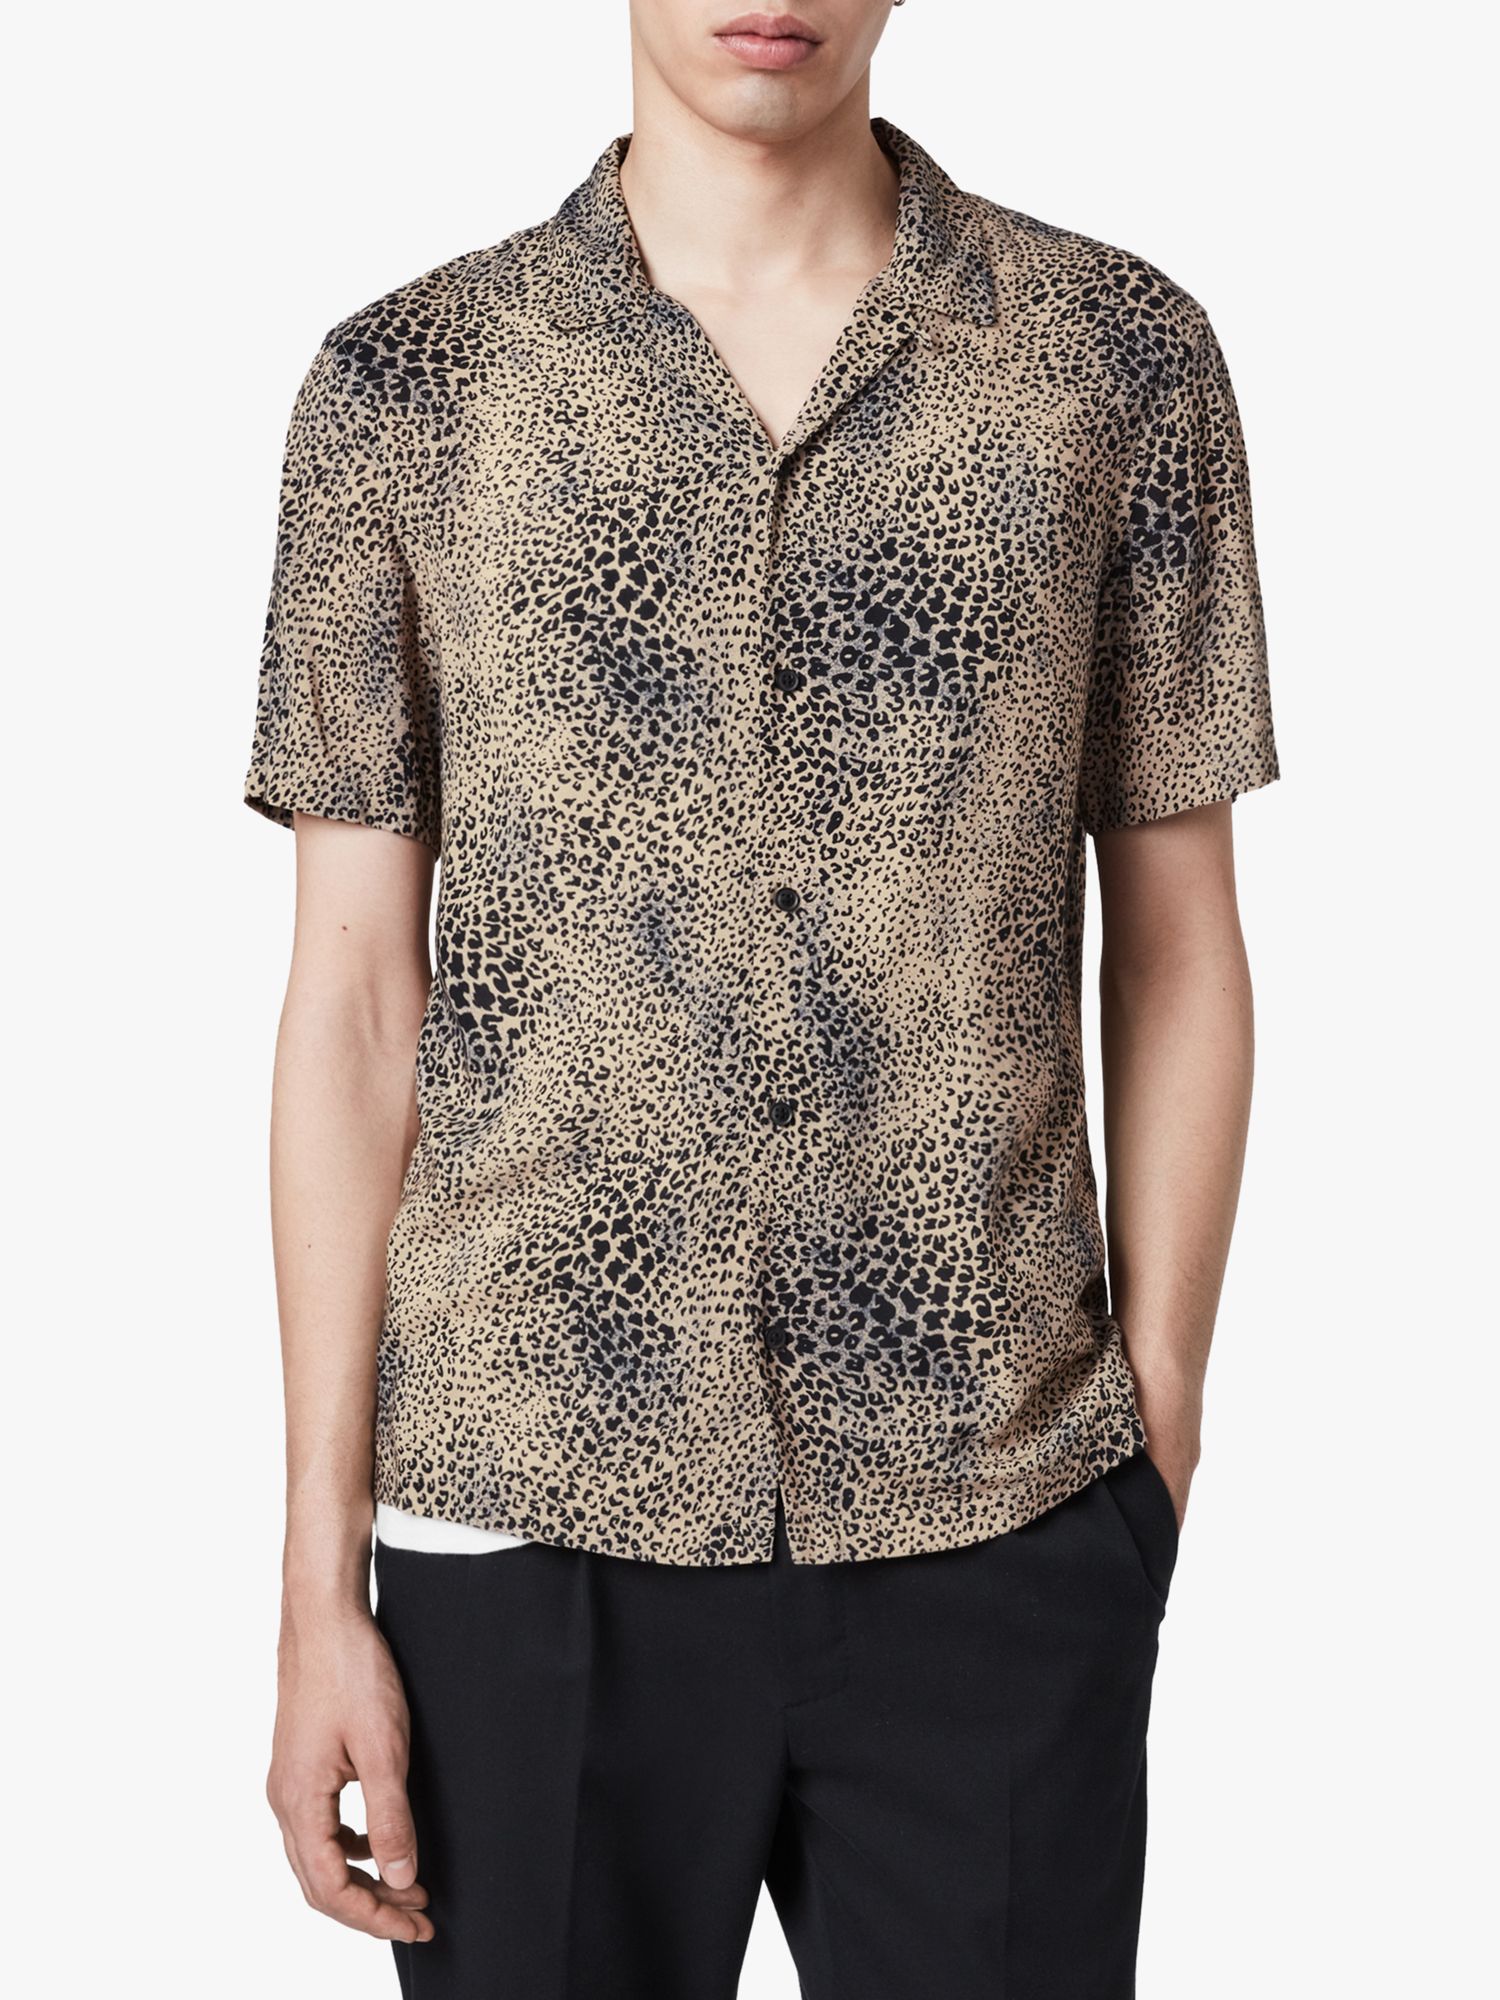 AllSaints Diffusion Short Sleeve Leopard Print Shirt, Brown/Black